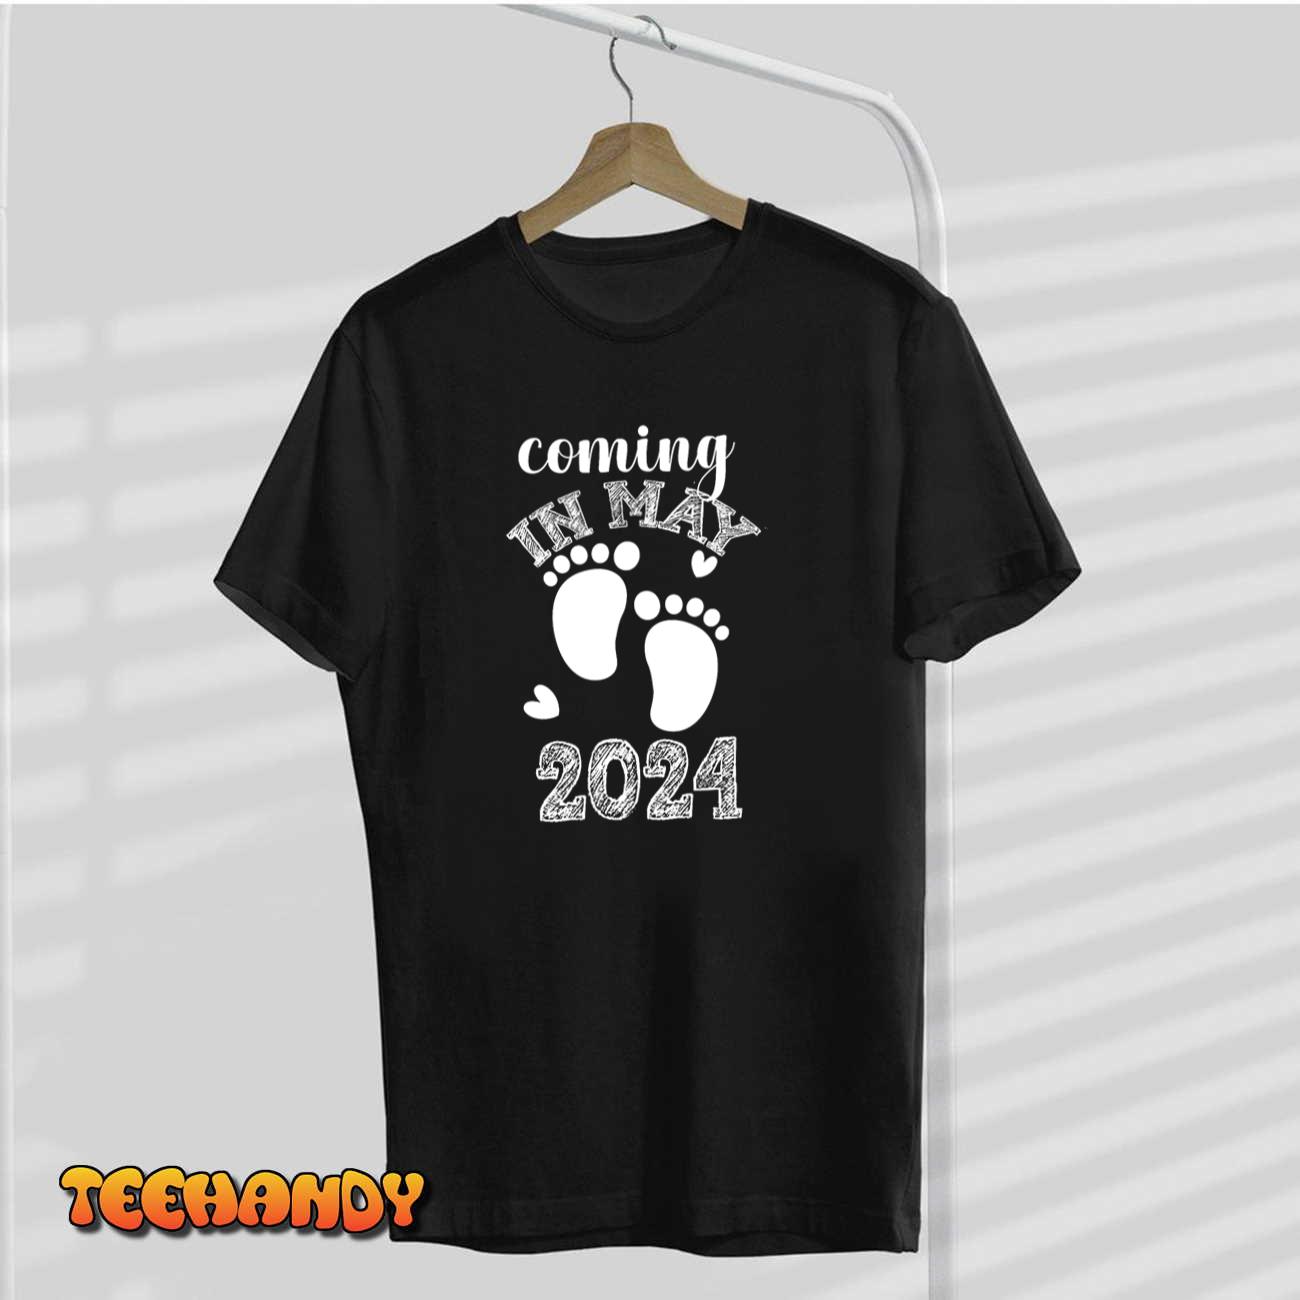 Coming Soon May 2024 Cute Baby Shower Boy Girl Pregnancy T-Shirt